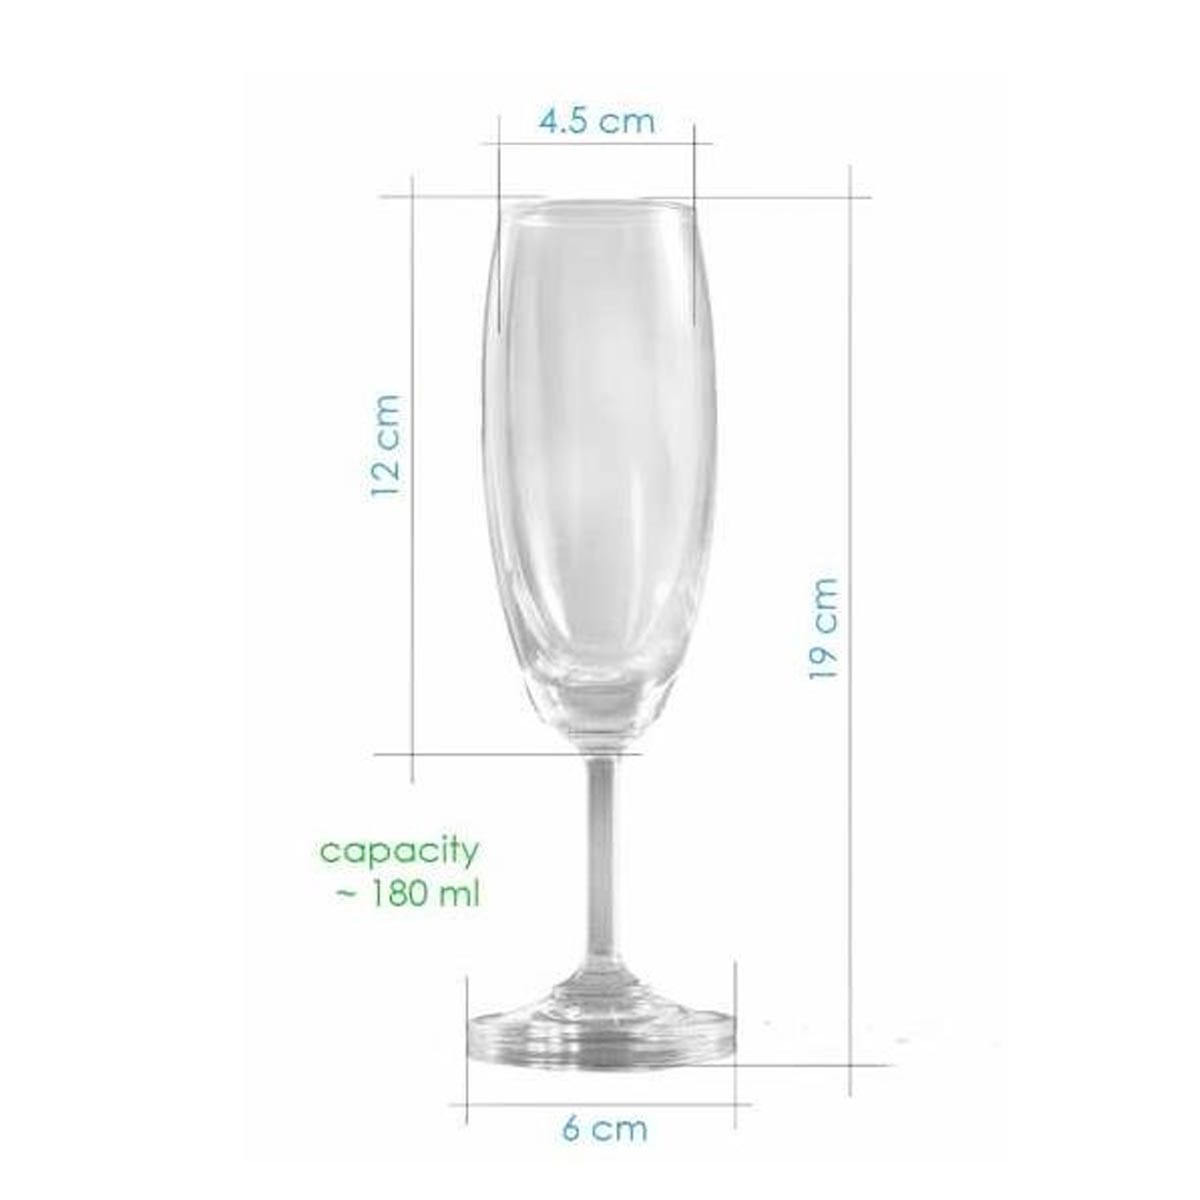 Custom Date Engraved Champagne Glasses | Set of 2 - withmuchlove